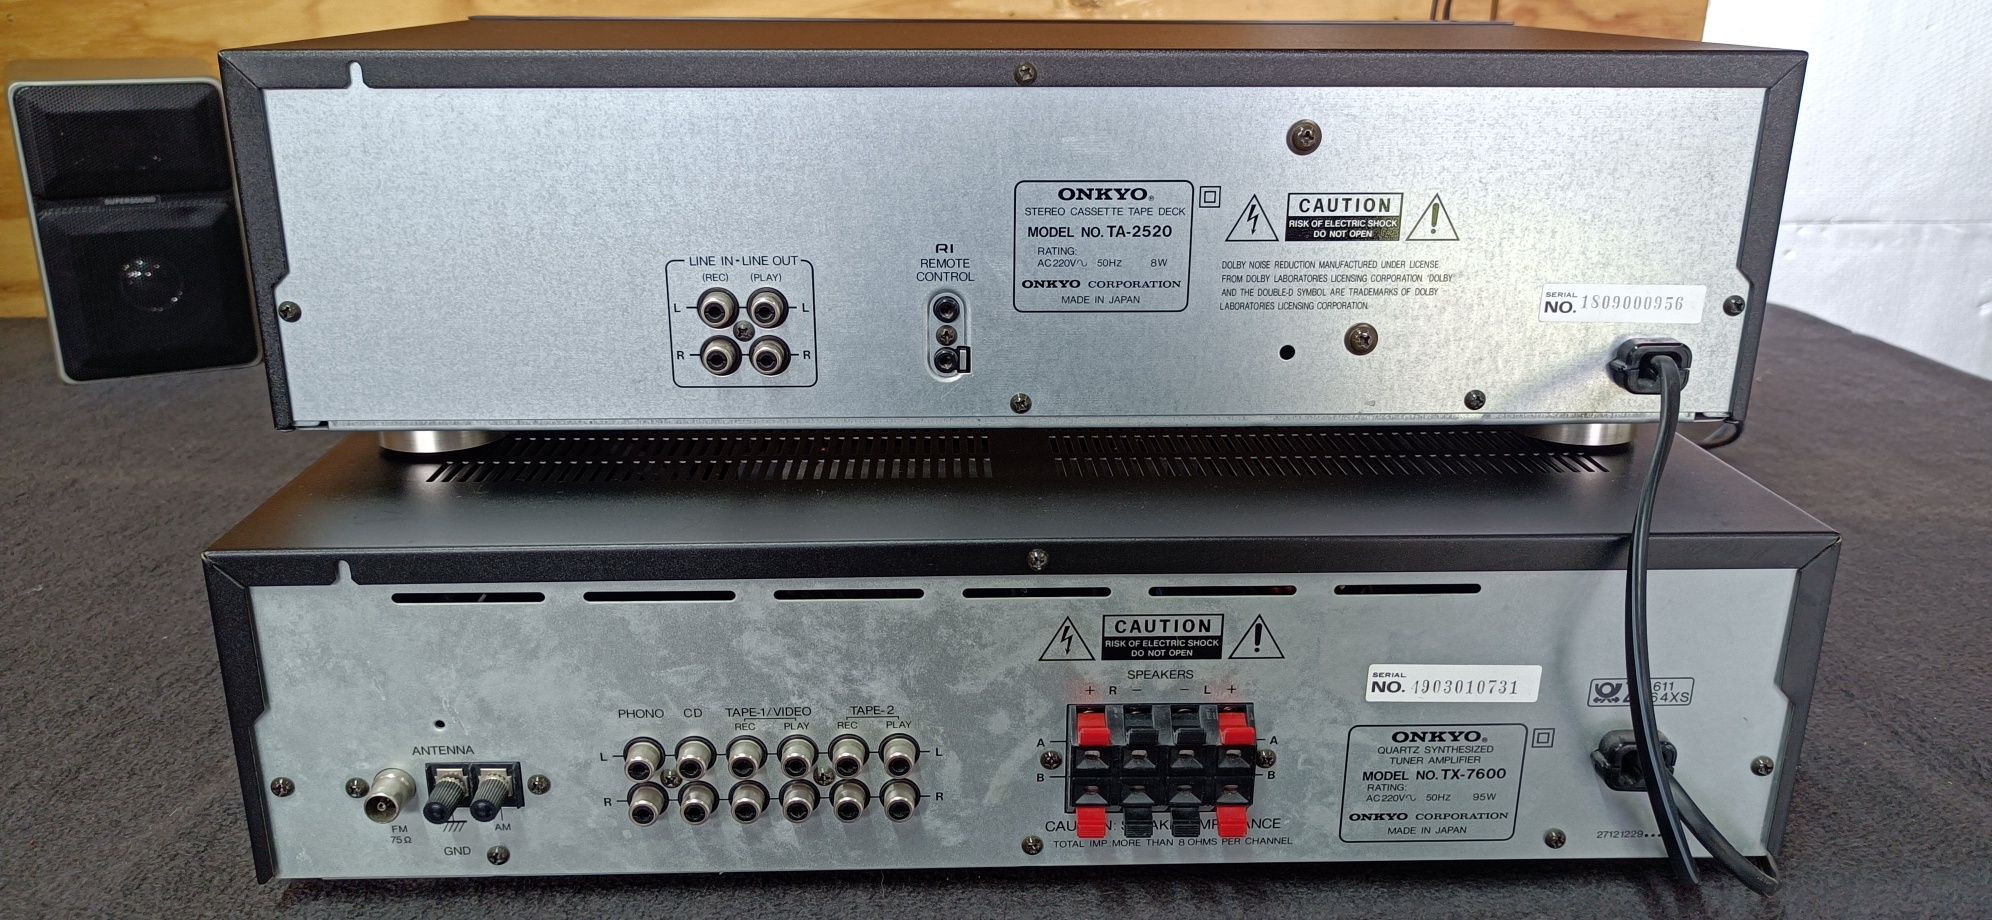 Amplituner Onkyo TX-7600 oraz Deck Onkyo TA-2520